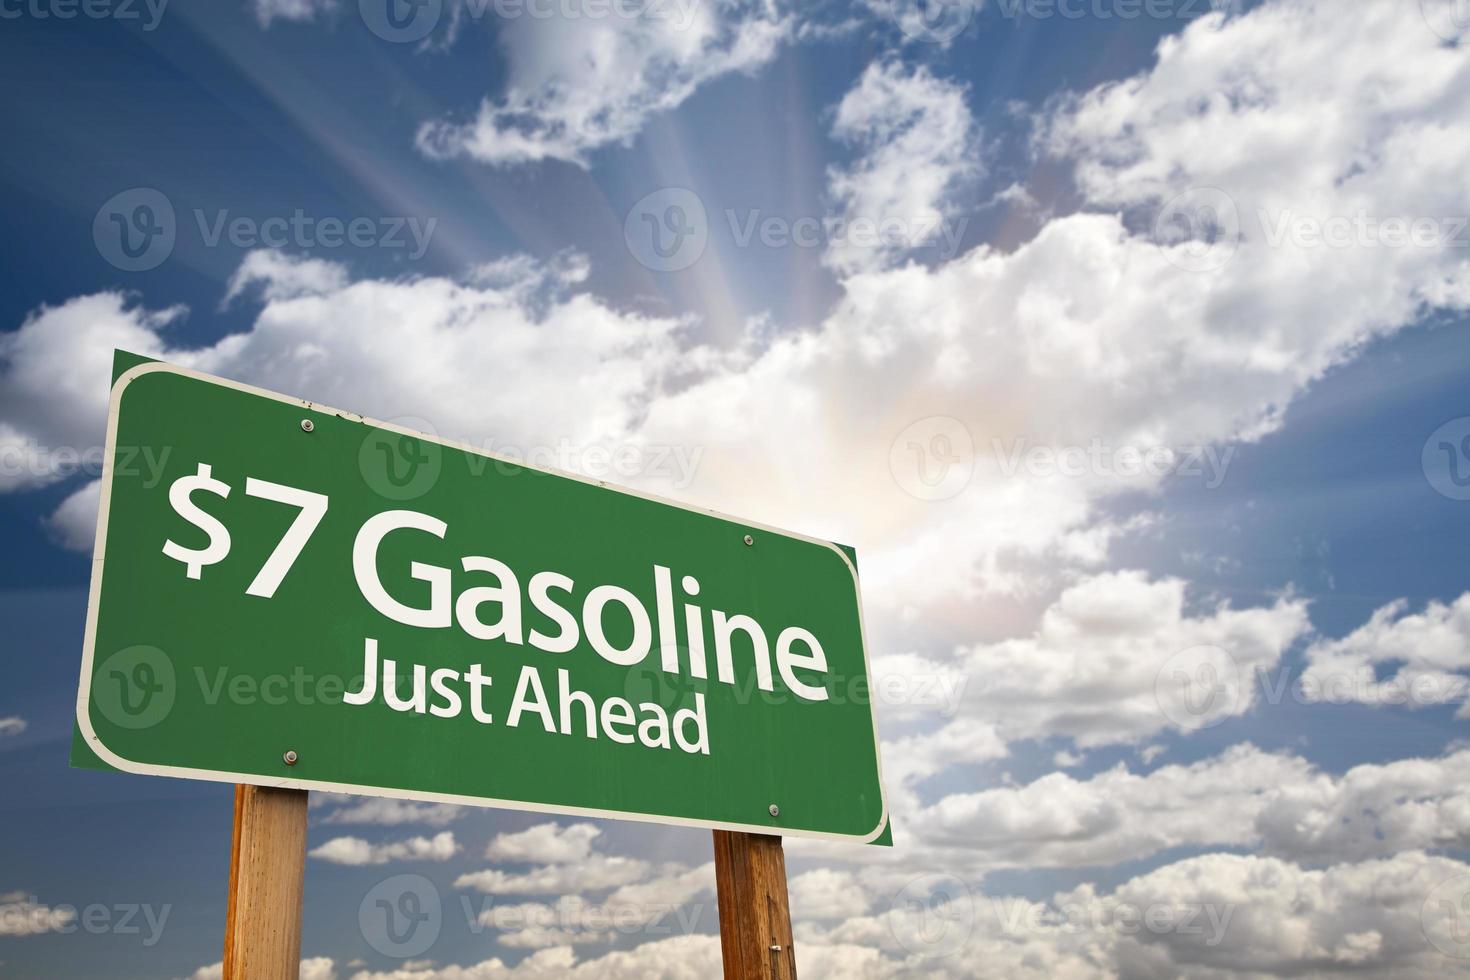 7 benzine groen weg teken en wolken foto